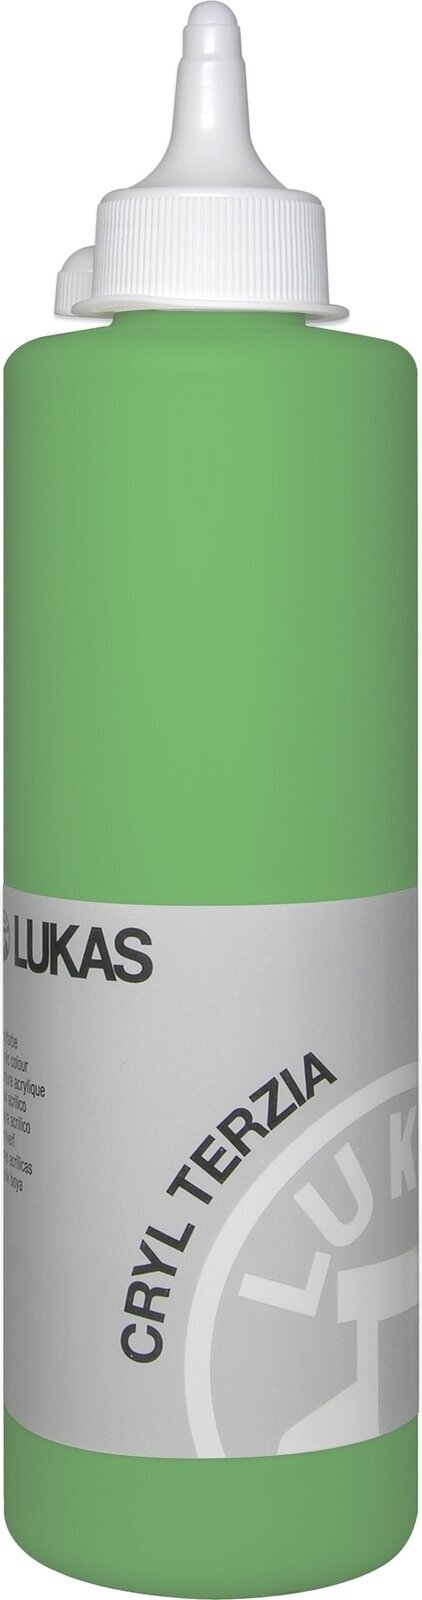 Acrylfarbe Lukas Cryl Terzia Acrylfarbe 500 ml Chrome Green Light Hue